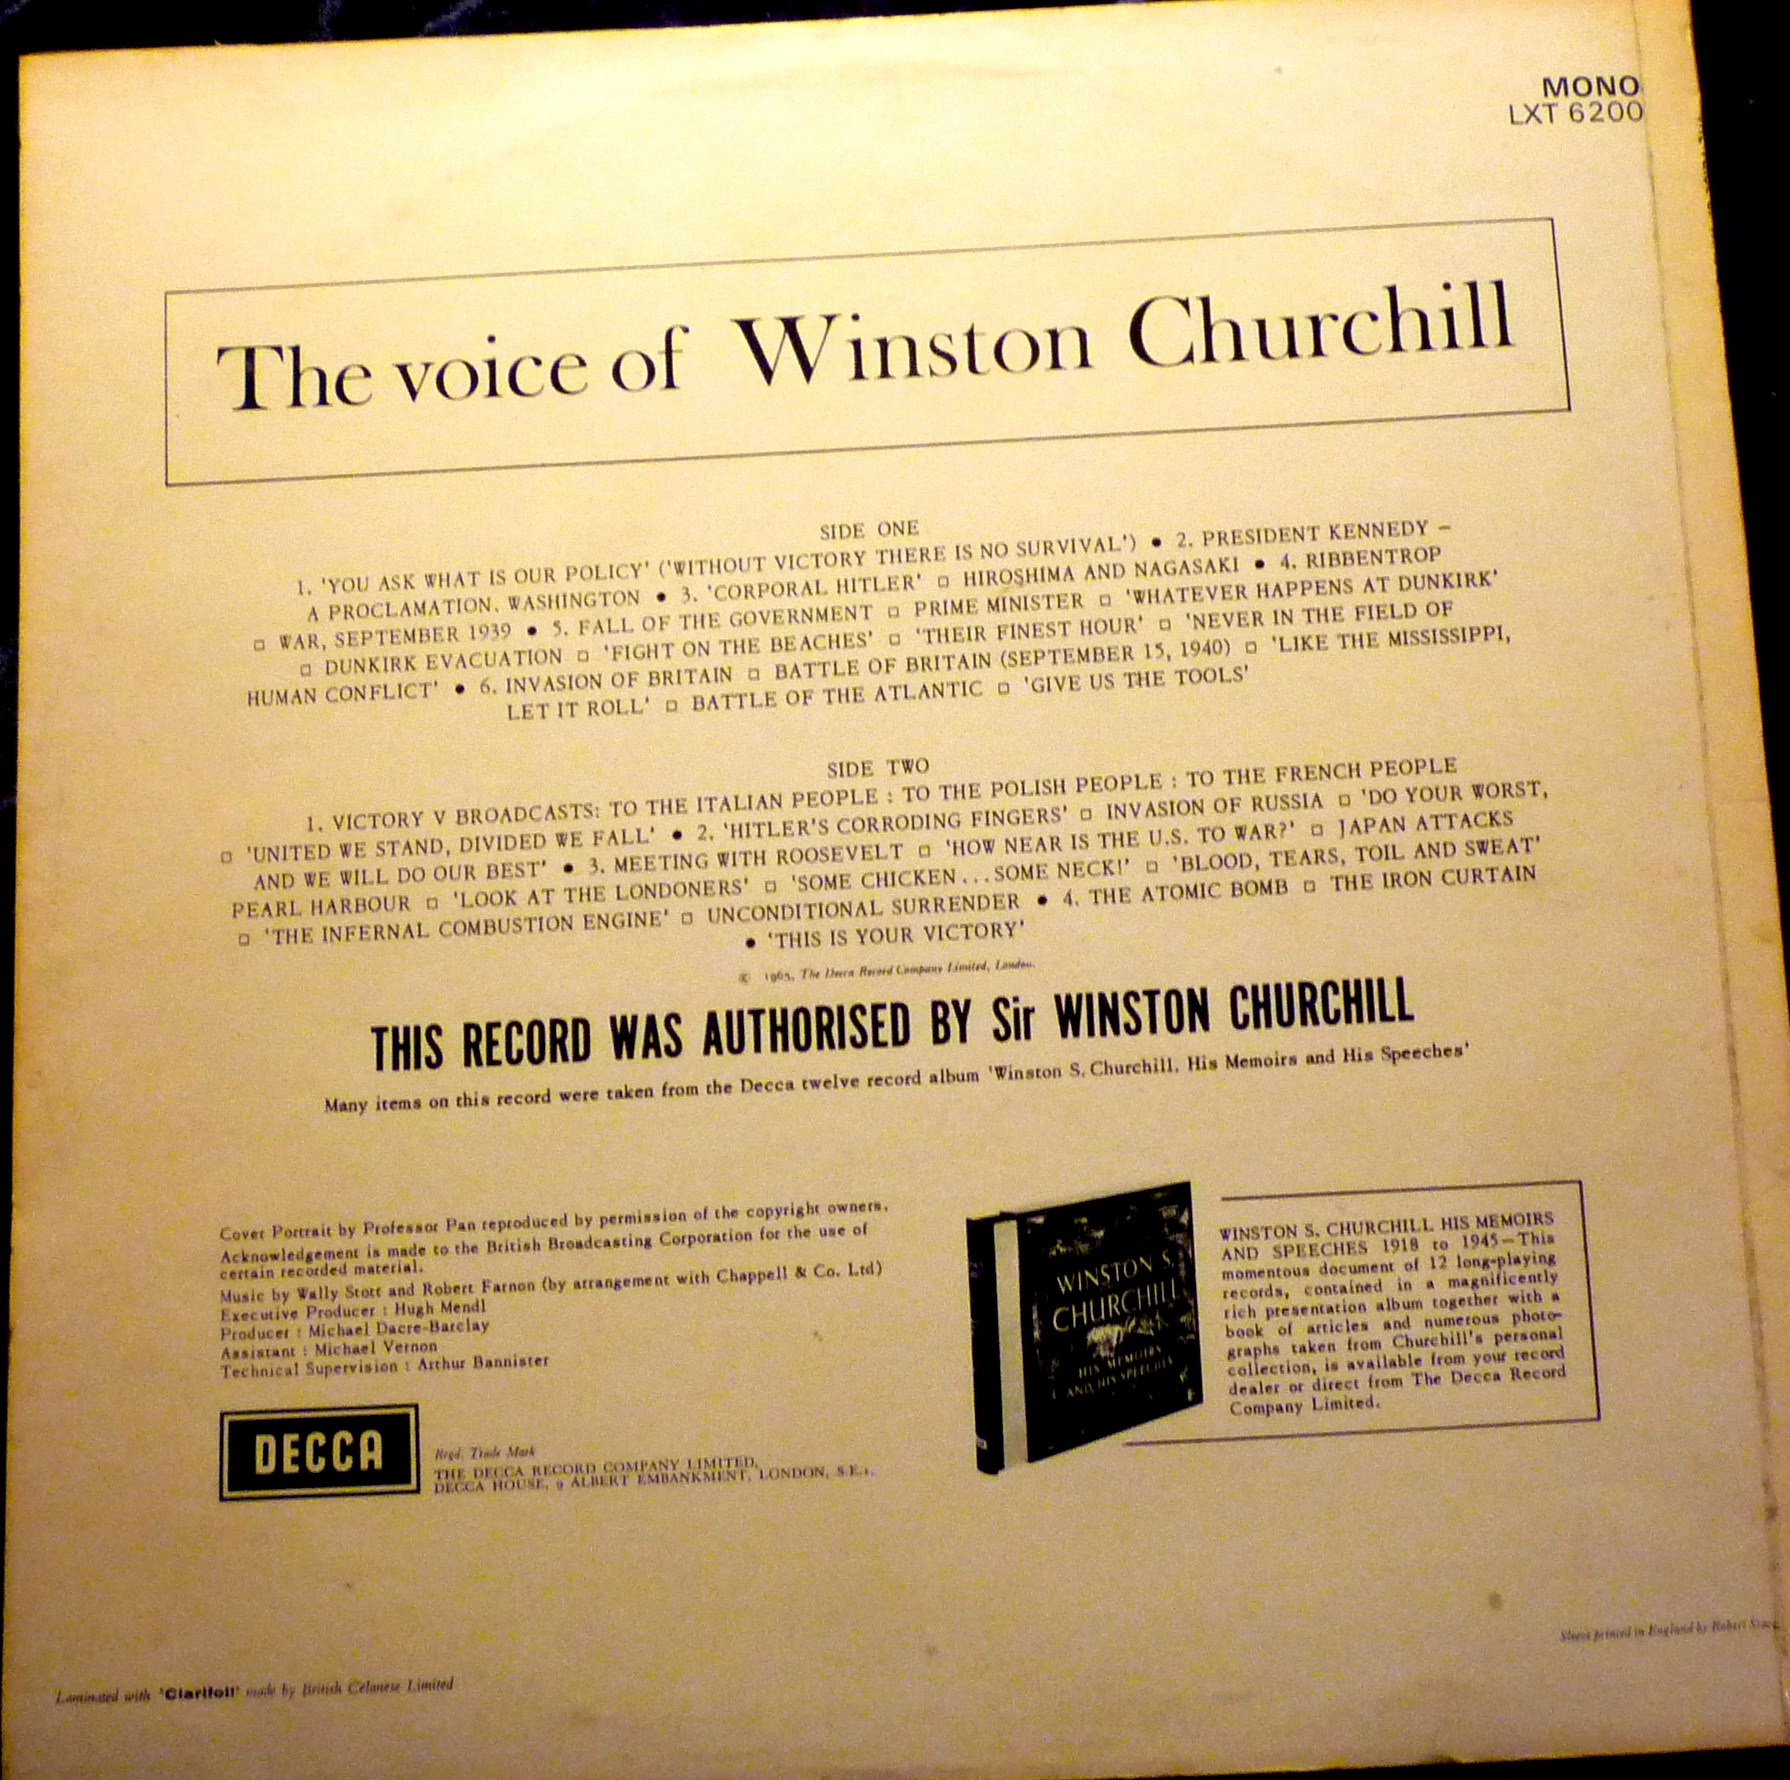 The Voice of Winston Churchill1790 x 1780